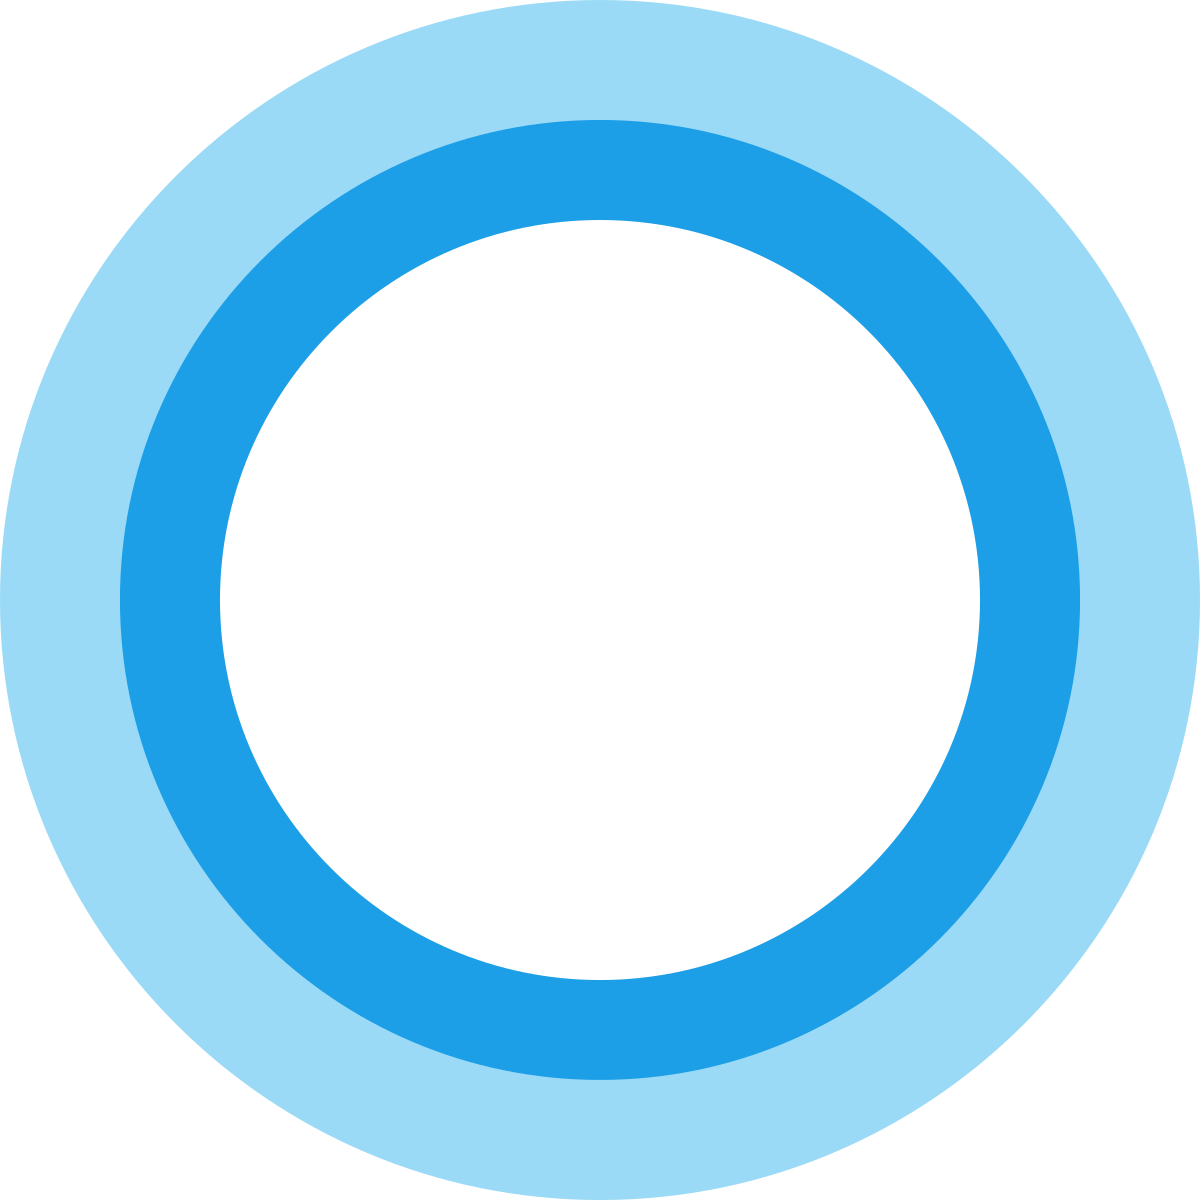 Cortana icon on computer screen